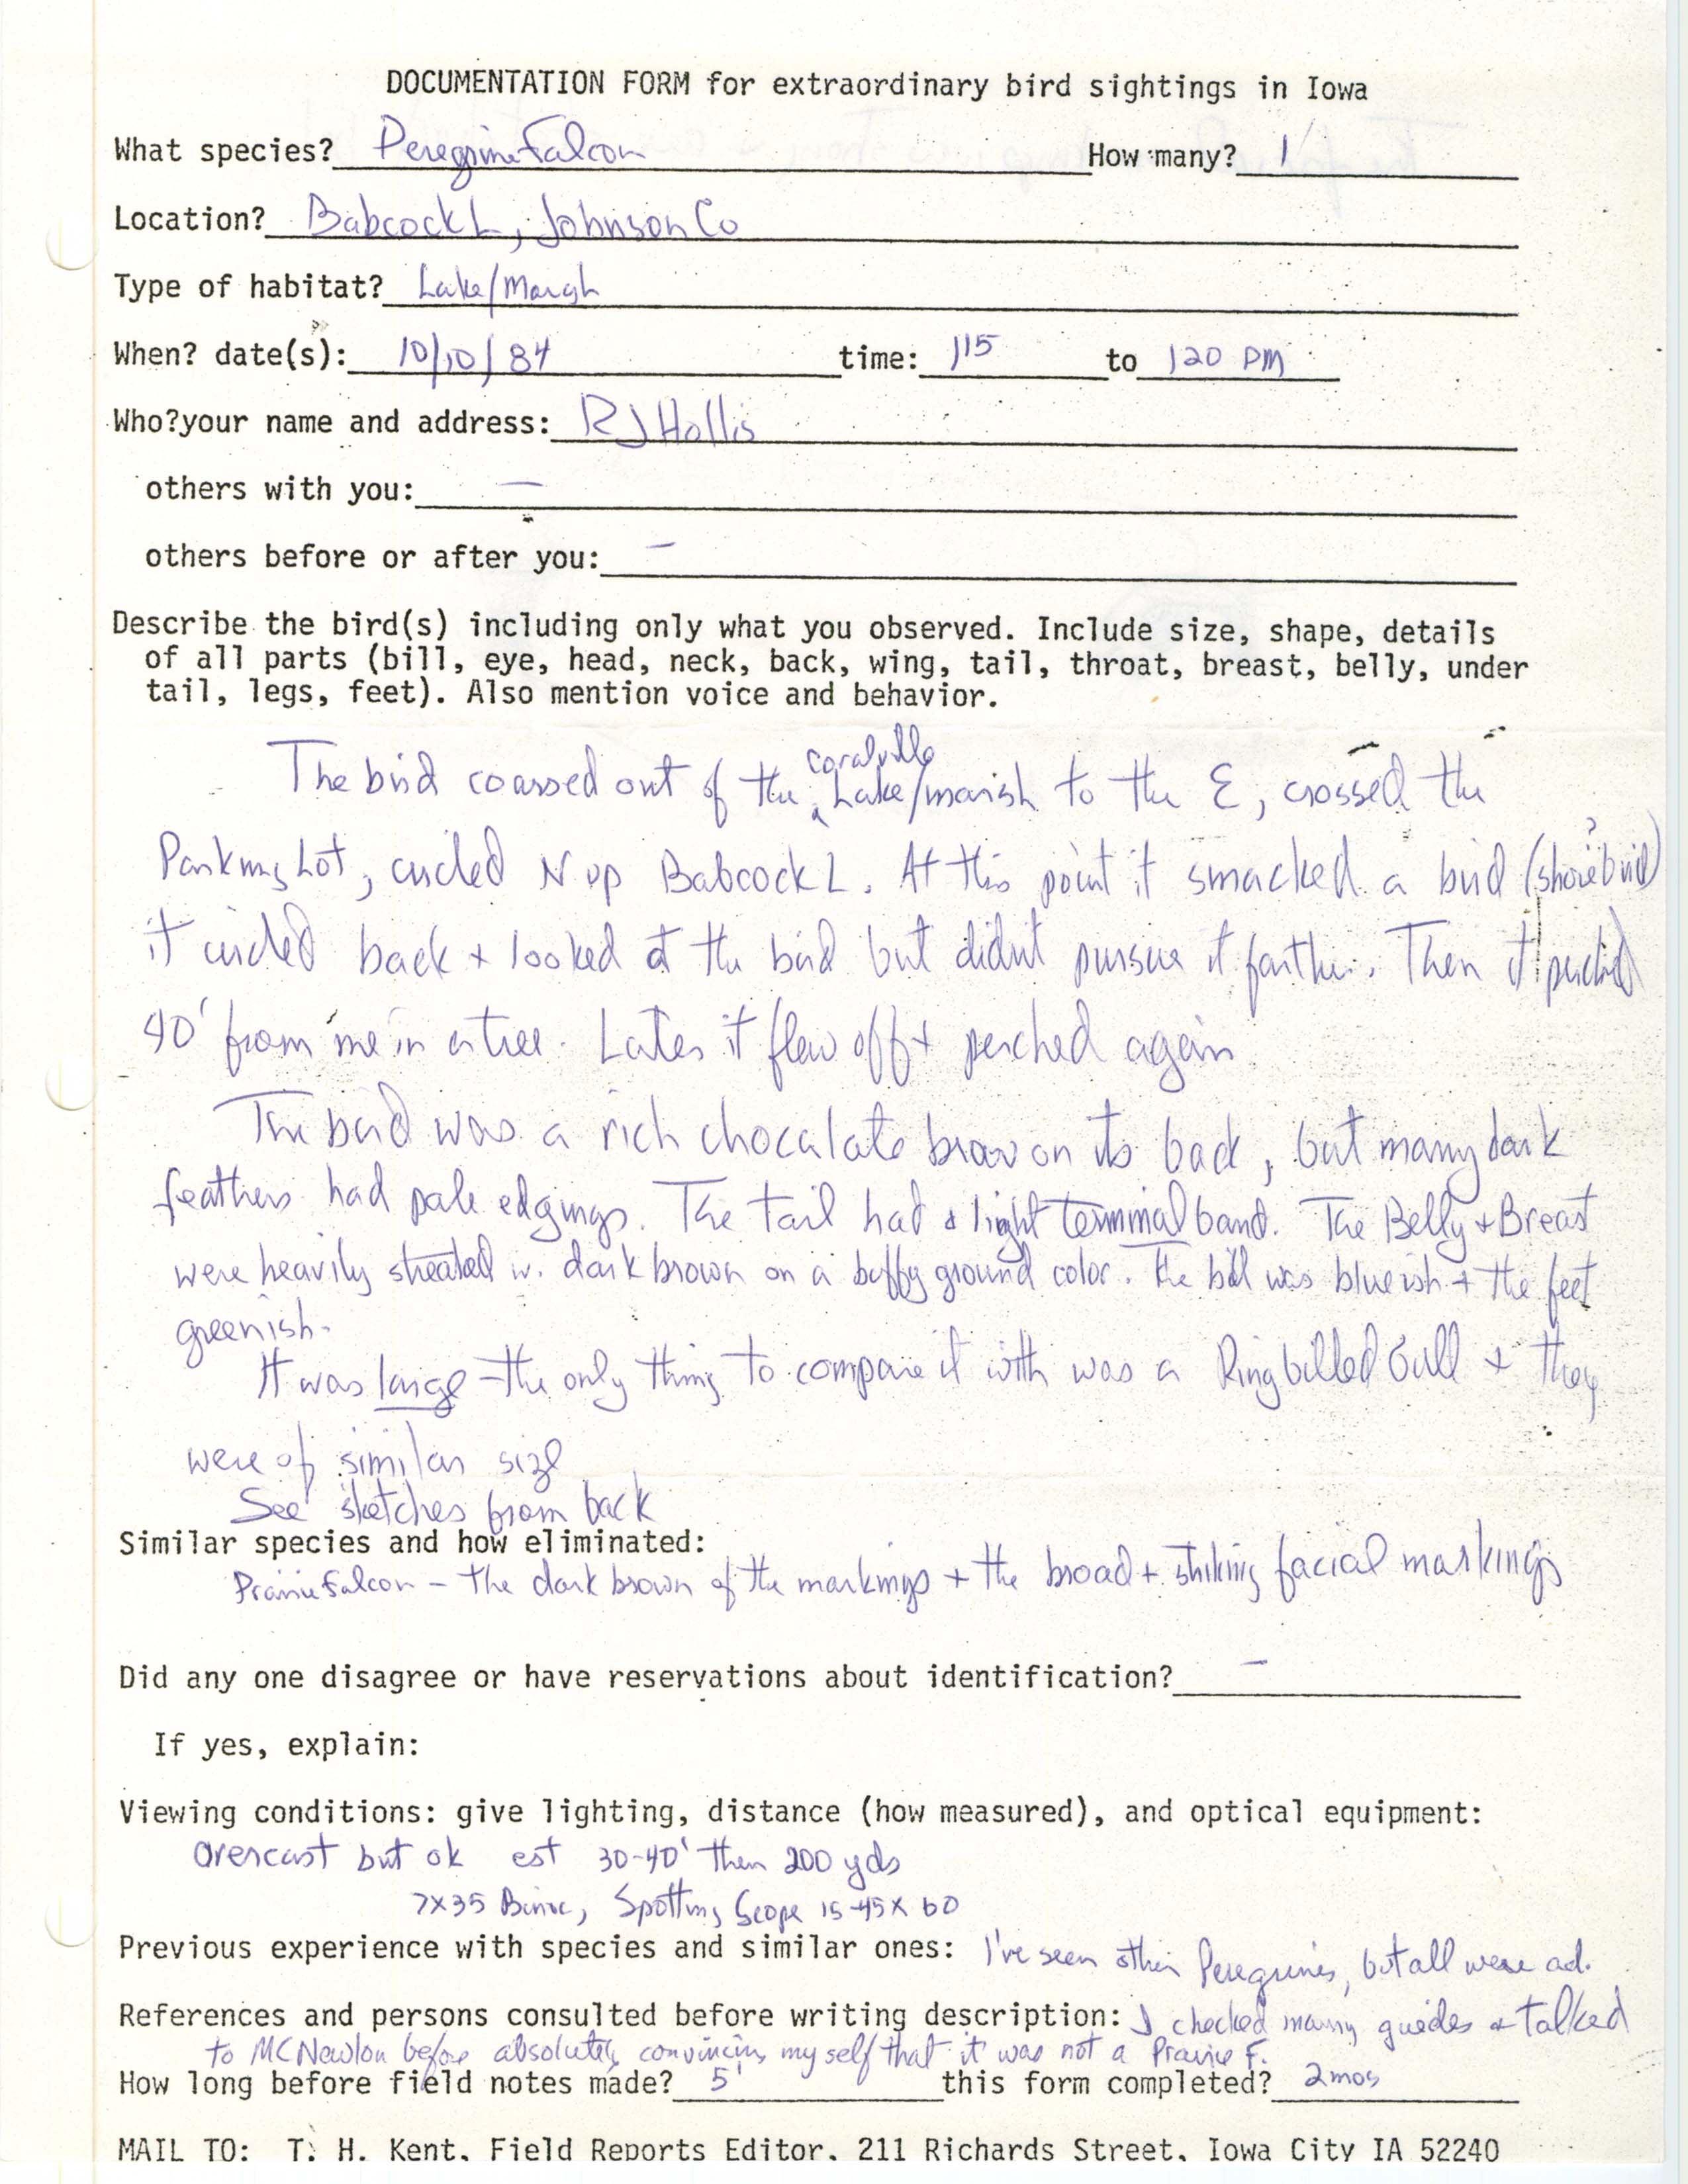 Rare bird documentation form for Peregrine Falcon at Babcock Lake, 1984